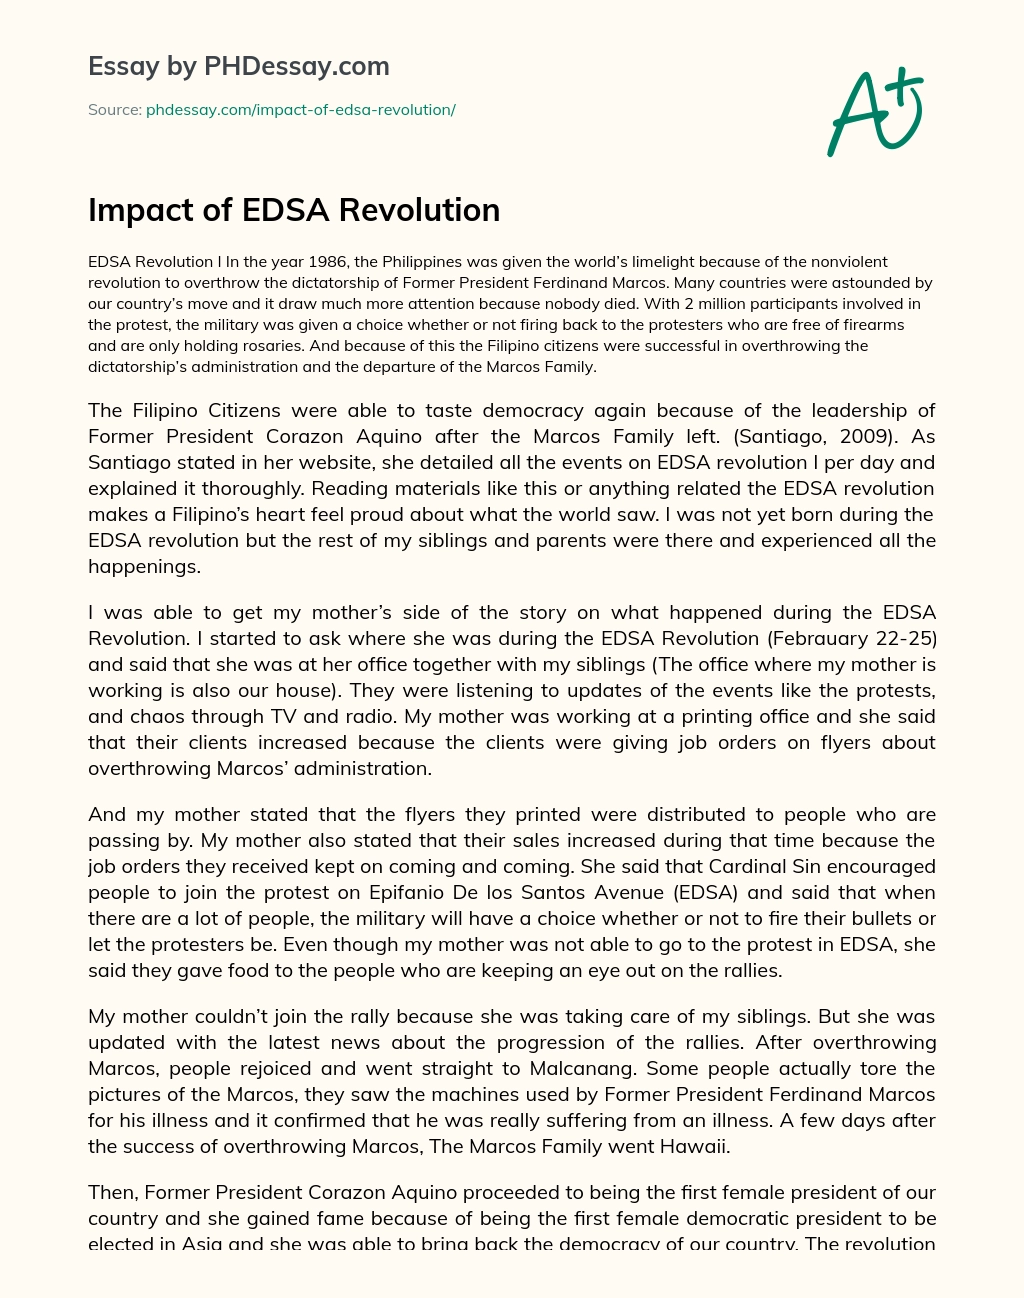 Impact of EDSA Revolution essay